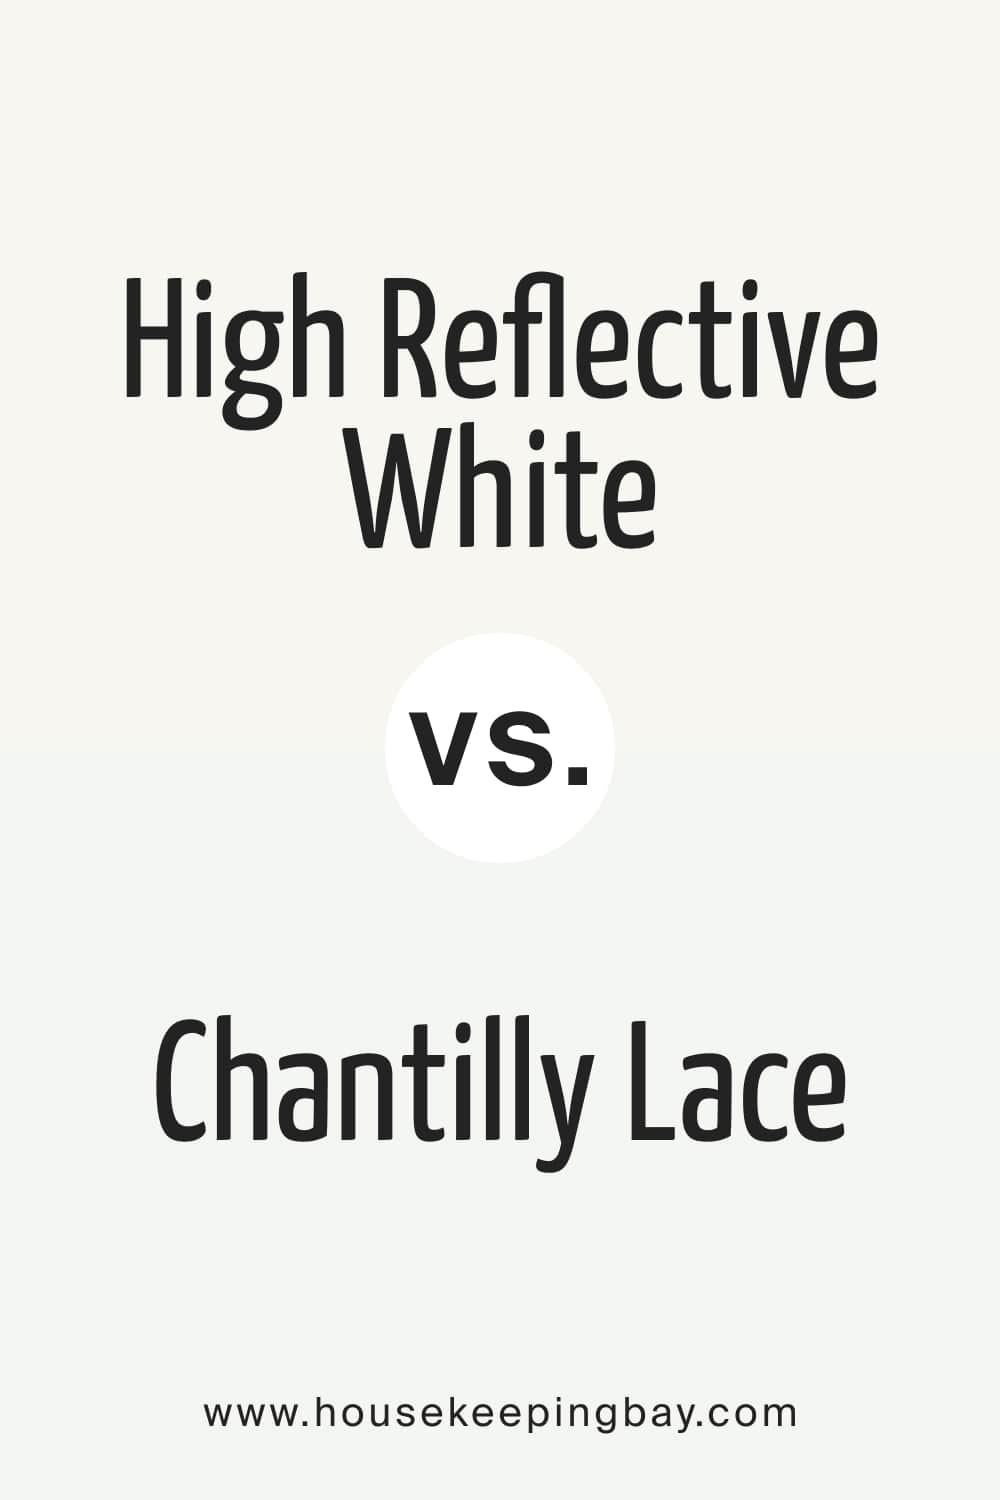 High Reflective White vs. Chantilly Lace